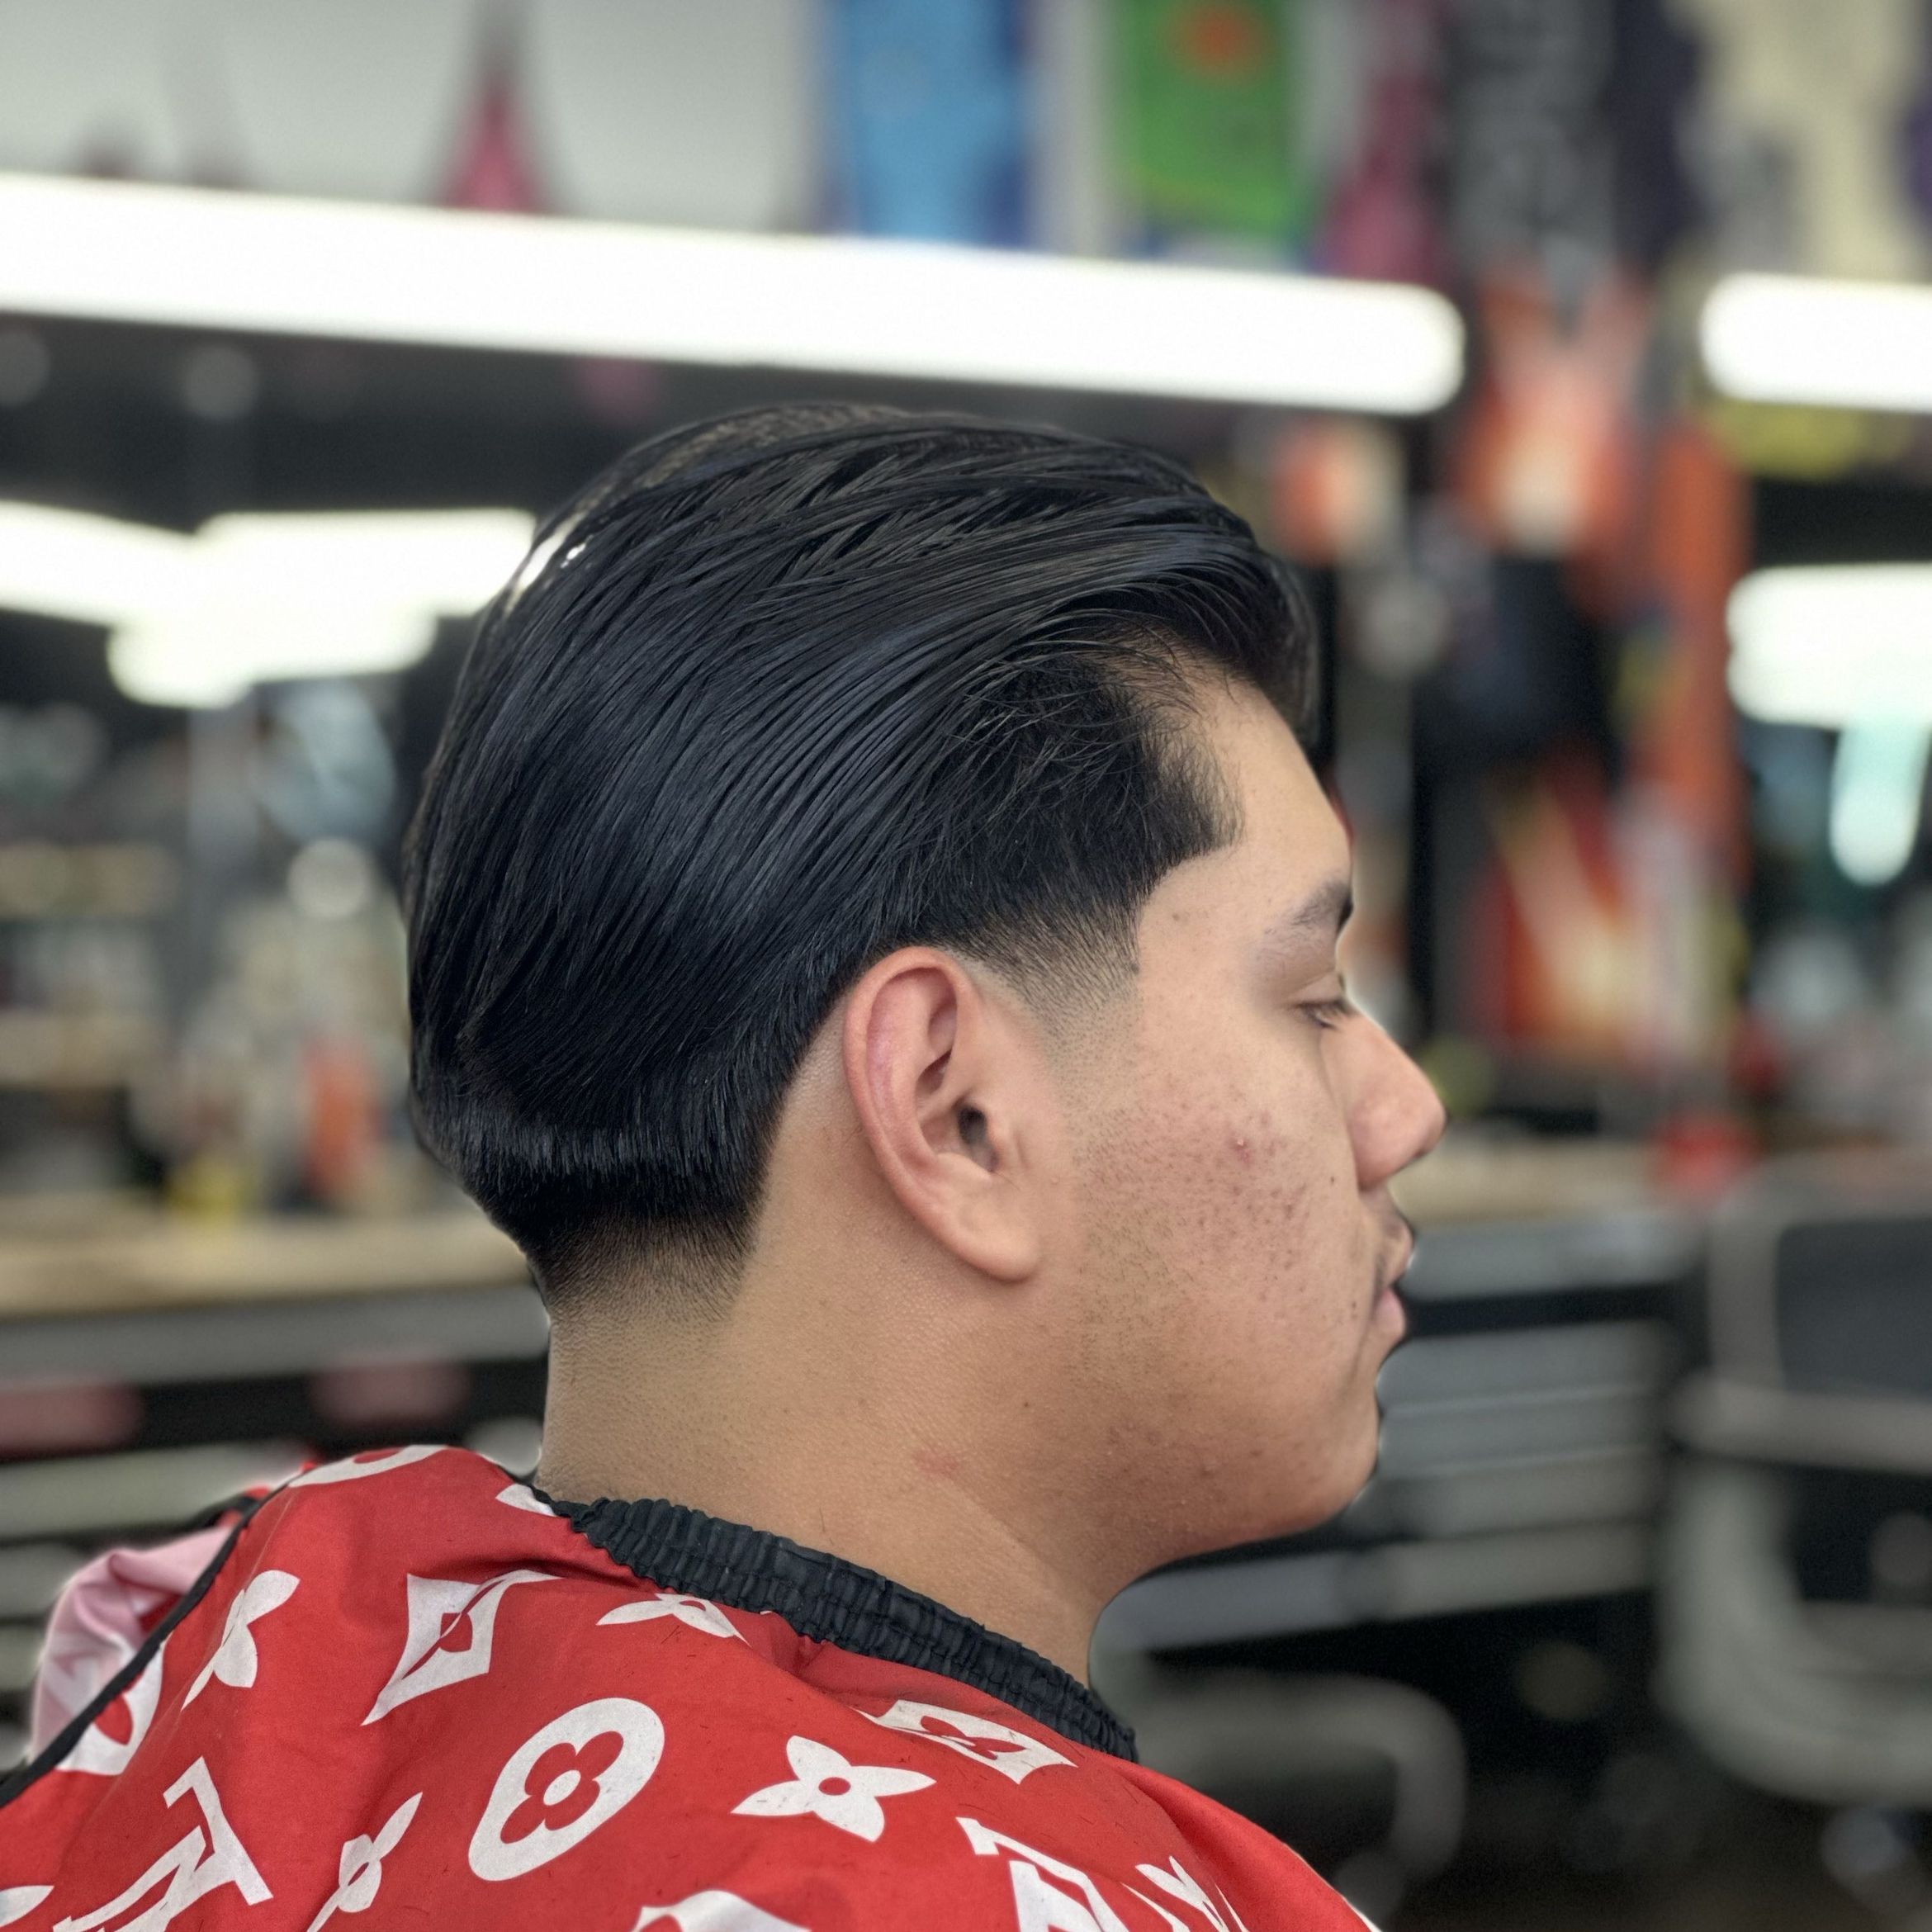 Starter + Bundle (Men’s Haircut + Shampoo) portfolio